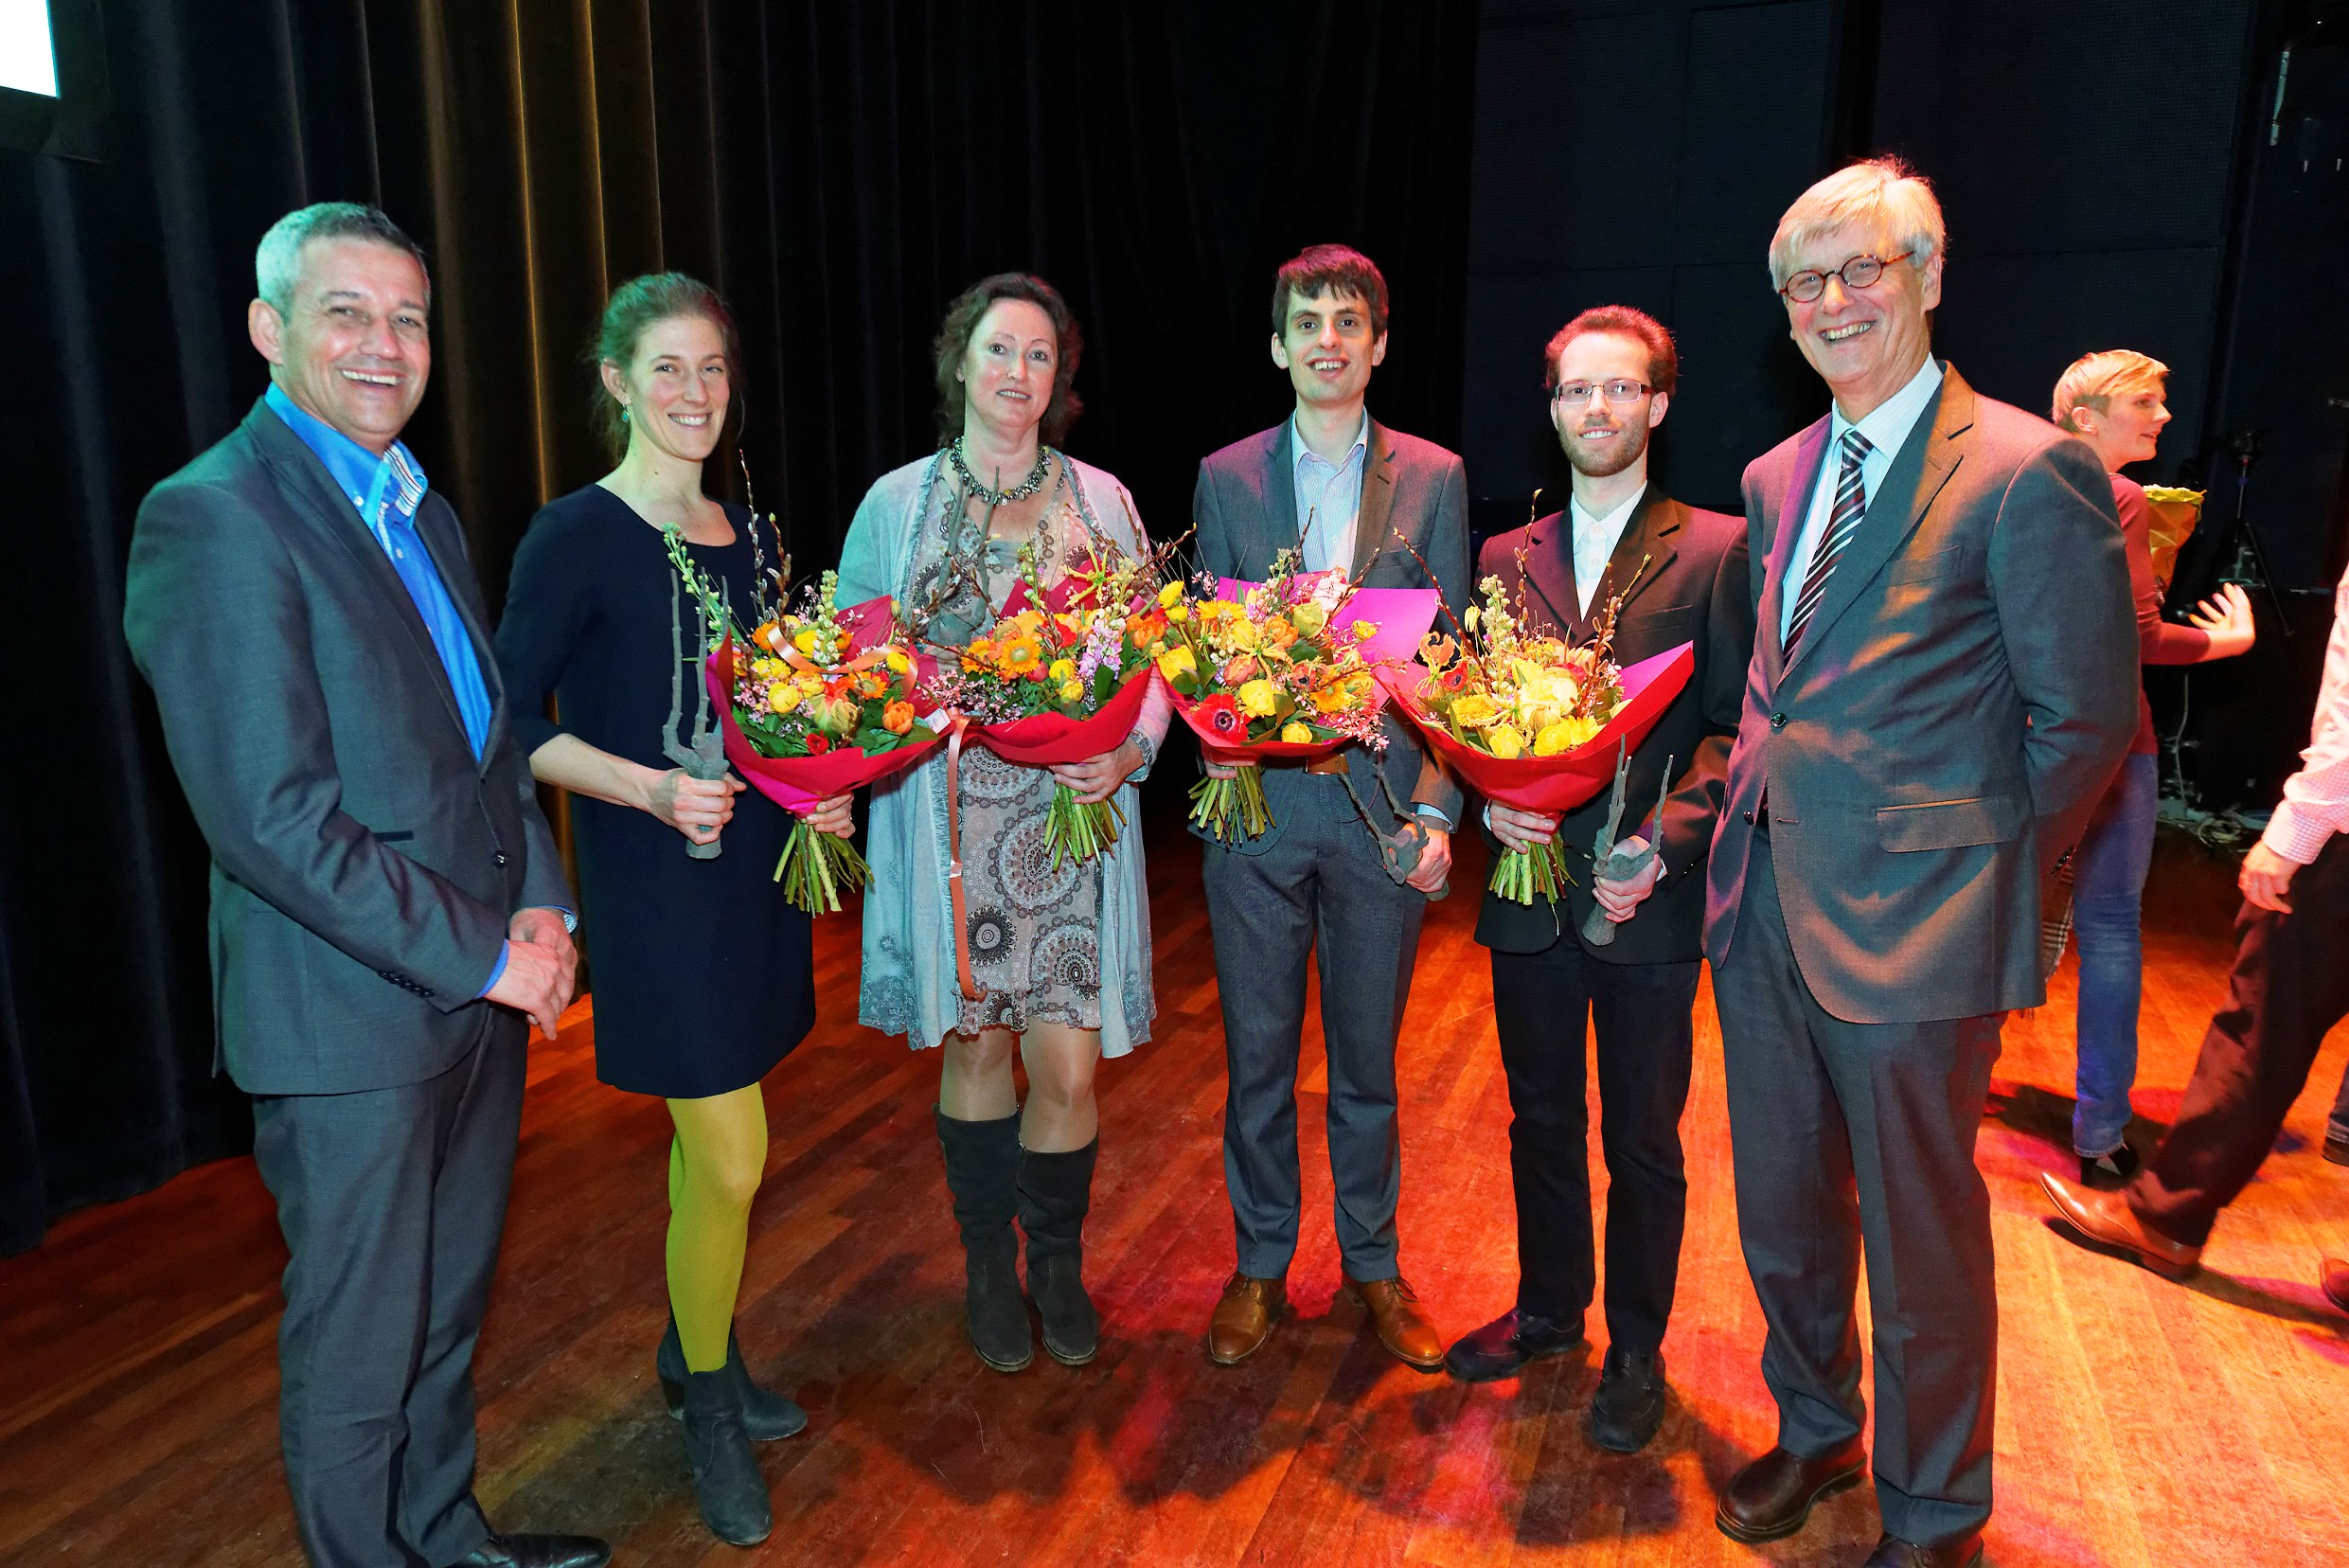 F.l.t.r.: dr. Han Swinkels (president of KLV), Lena Schulte-Uebbing, Jacqueline Zappeij (mother of Nick Middeldorp), Berend van der Meer, Uroš Cerkvenik (overall winner) and prof.dr. Just Vlak (president of the jury)